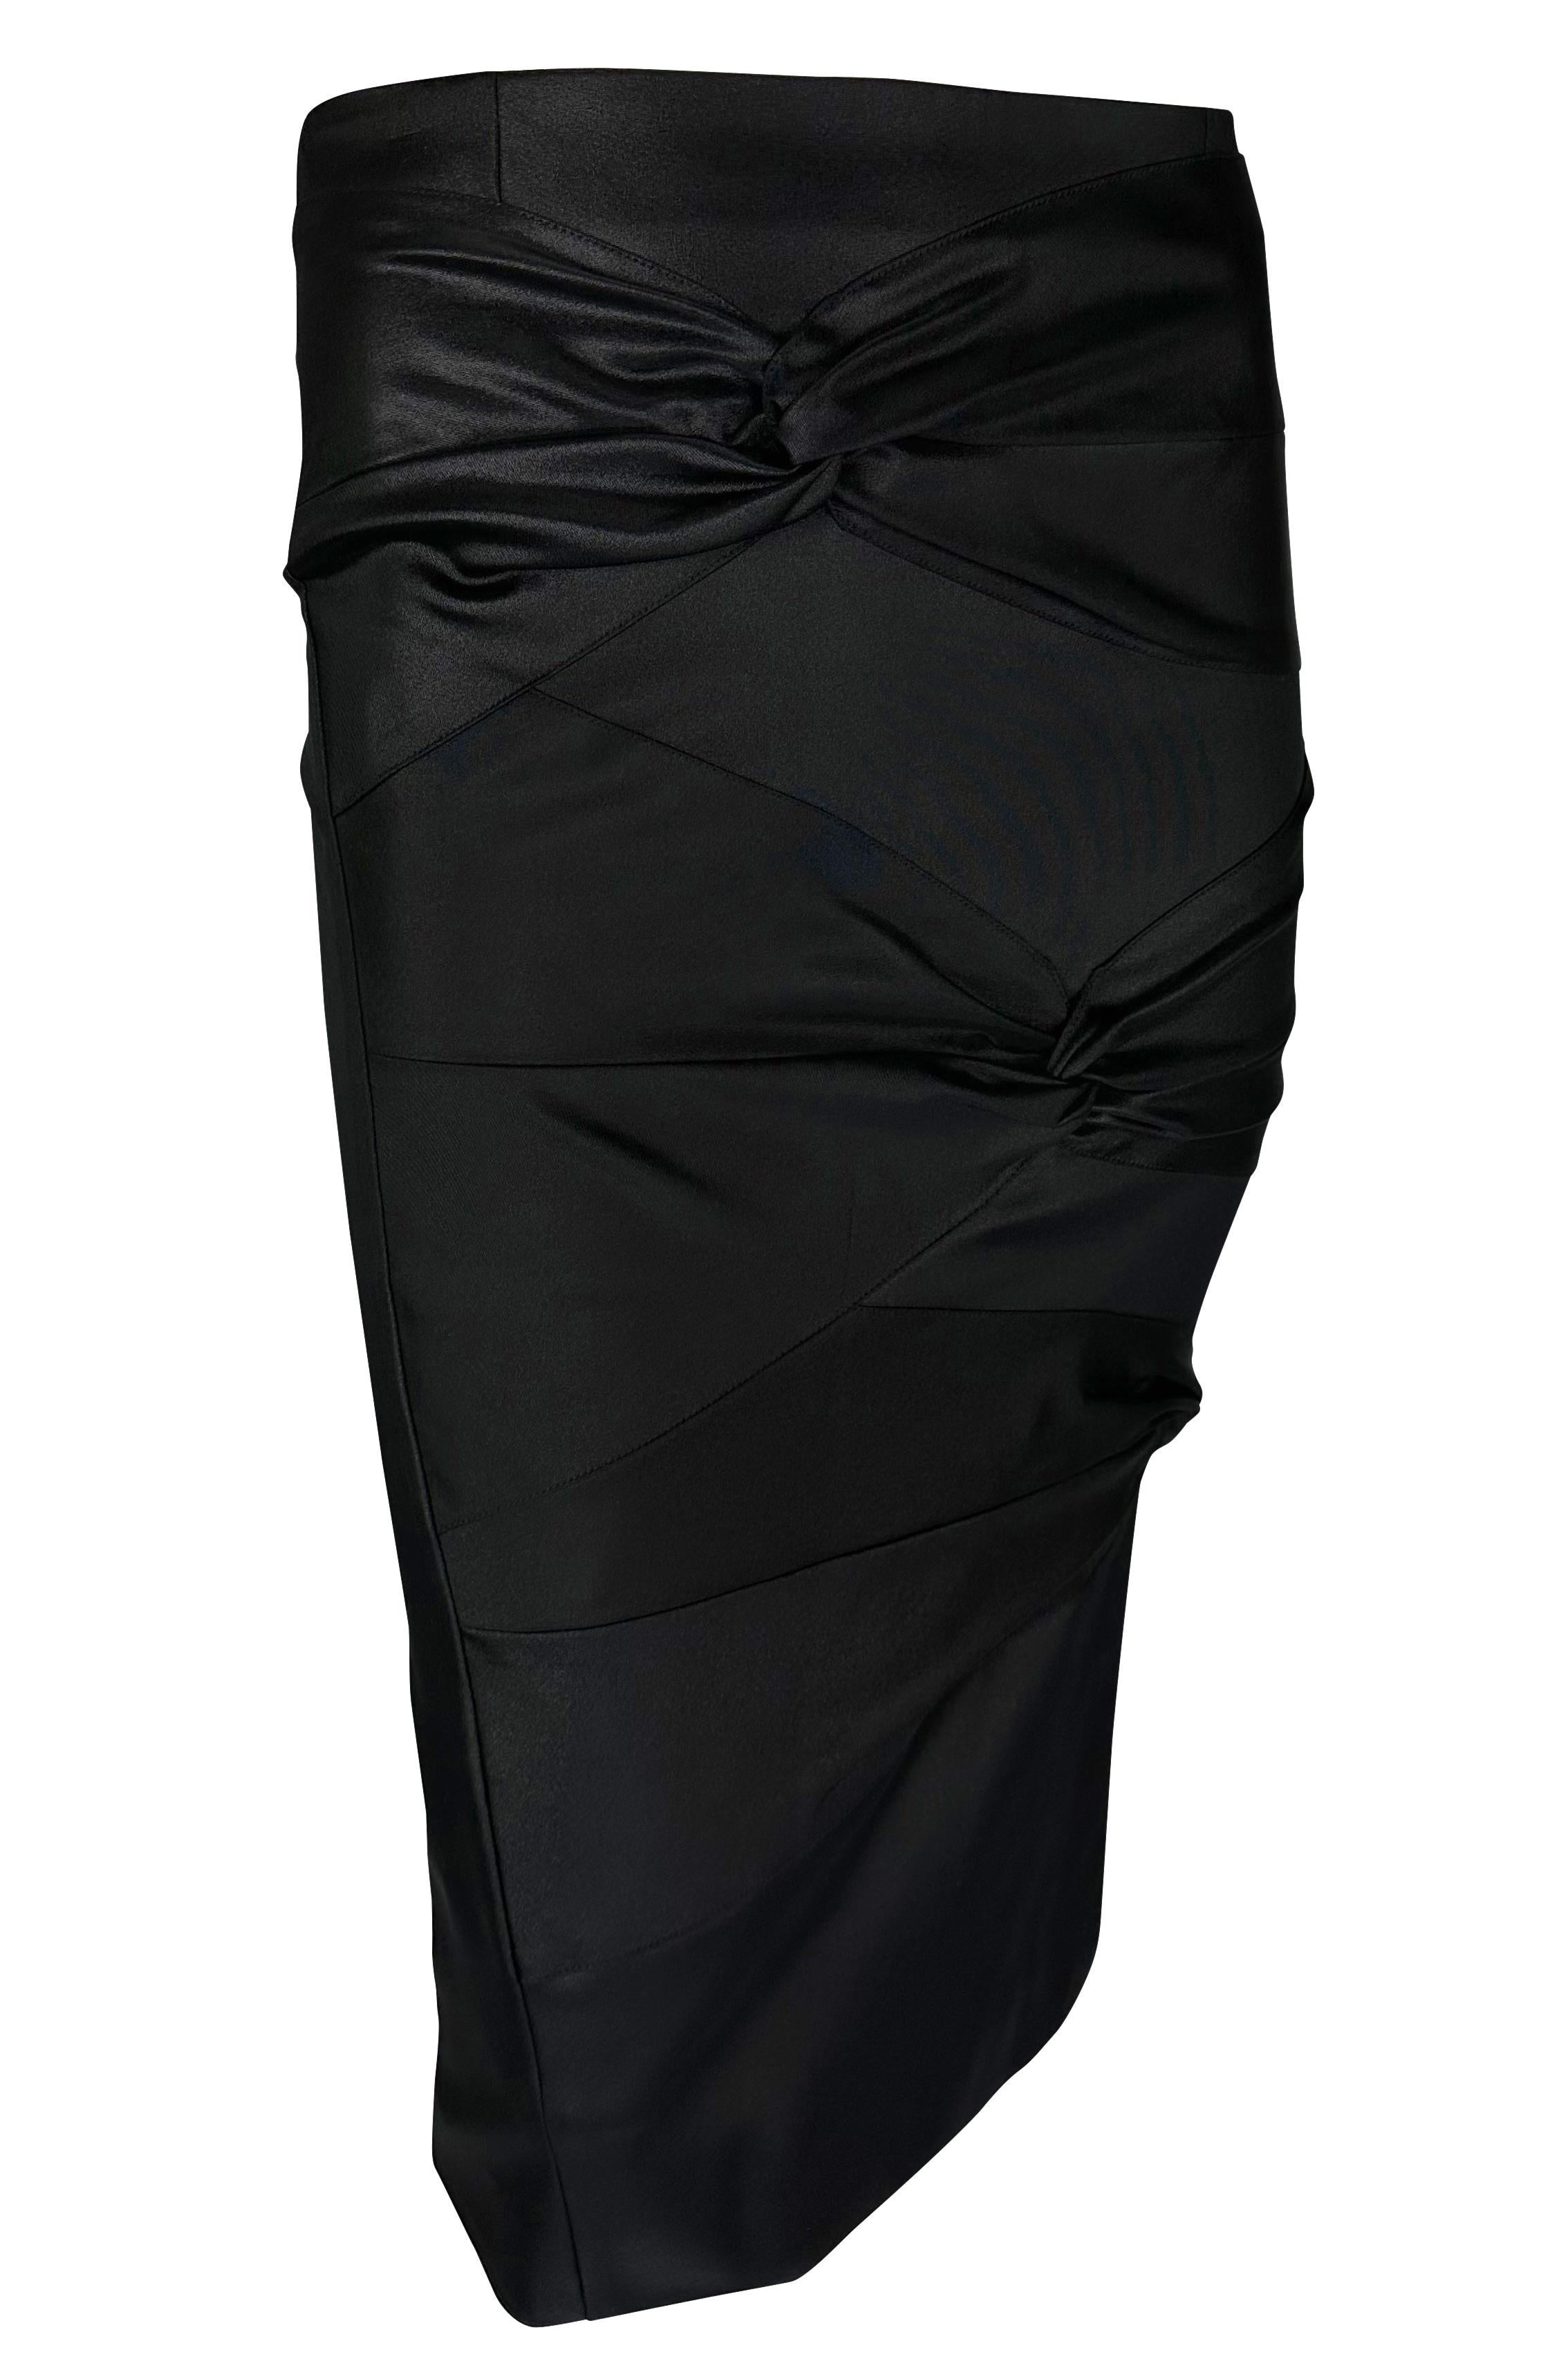 F/W 2003 Christian Dior by John Galliano for Tie Accenture Bodycon Stretch Skirt (jupe extensible avec nœud de cravate) en vente 3